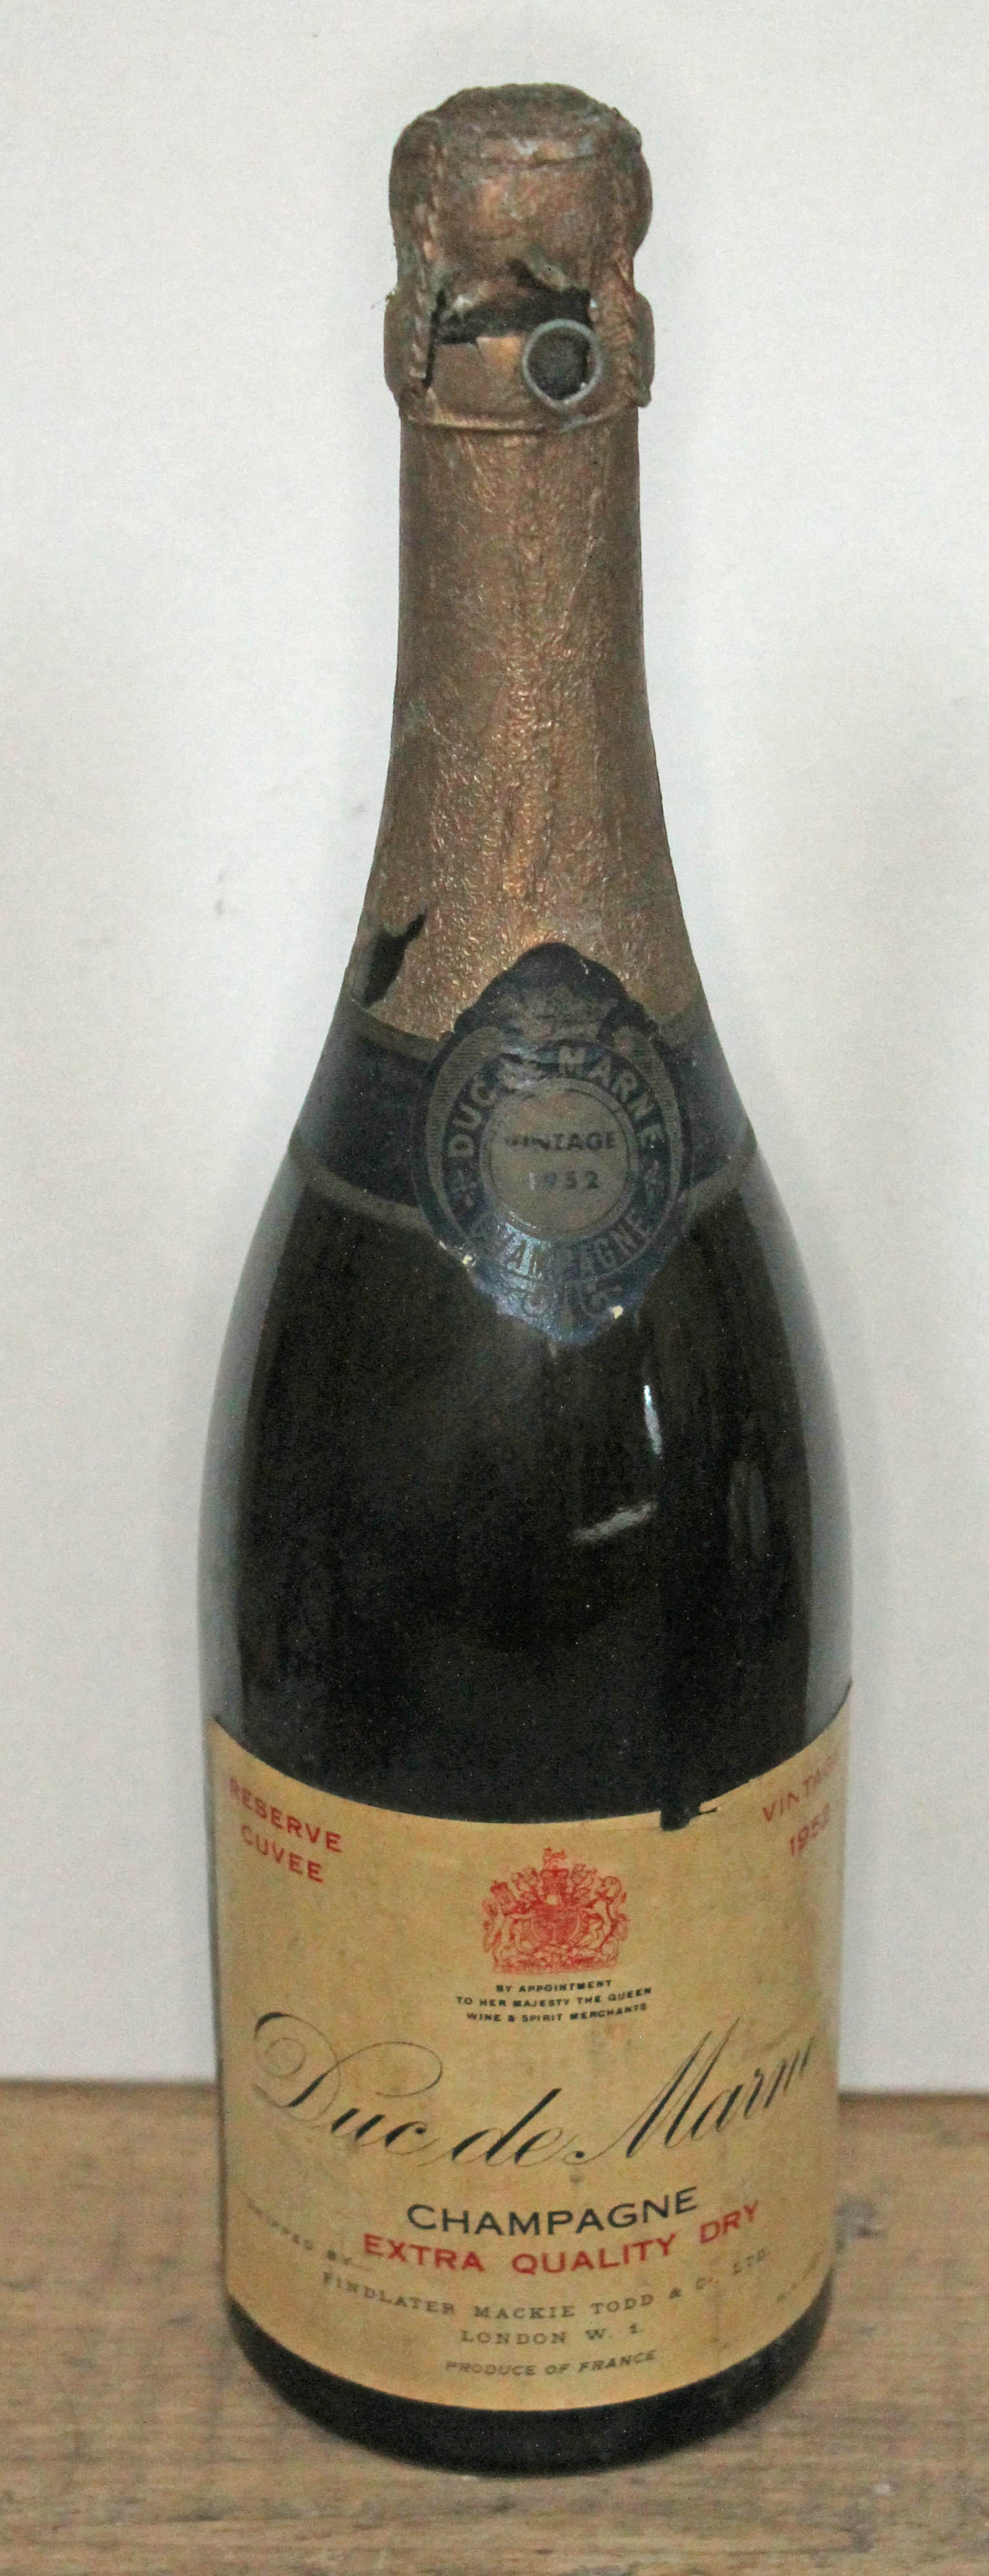 Duc De Marne 1952 vintage champagne, 75cl, level 3.5cm from bottom when upside down, wear to foil.